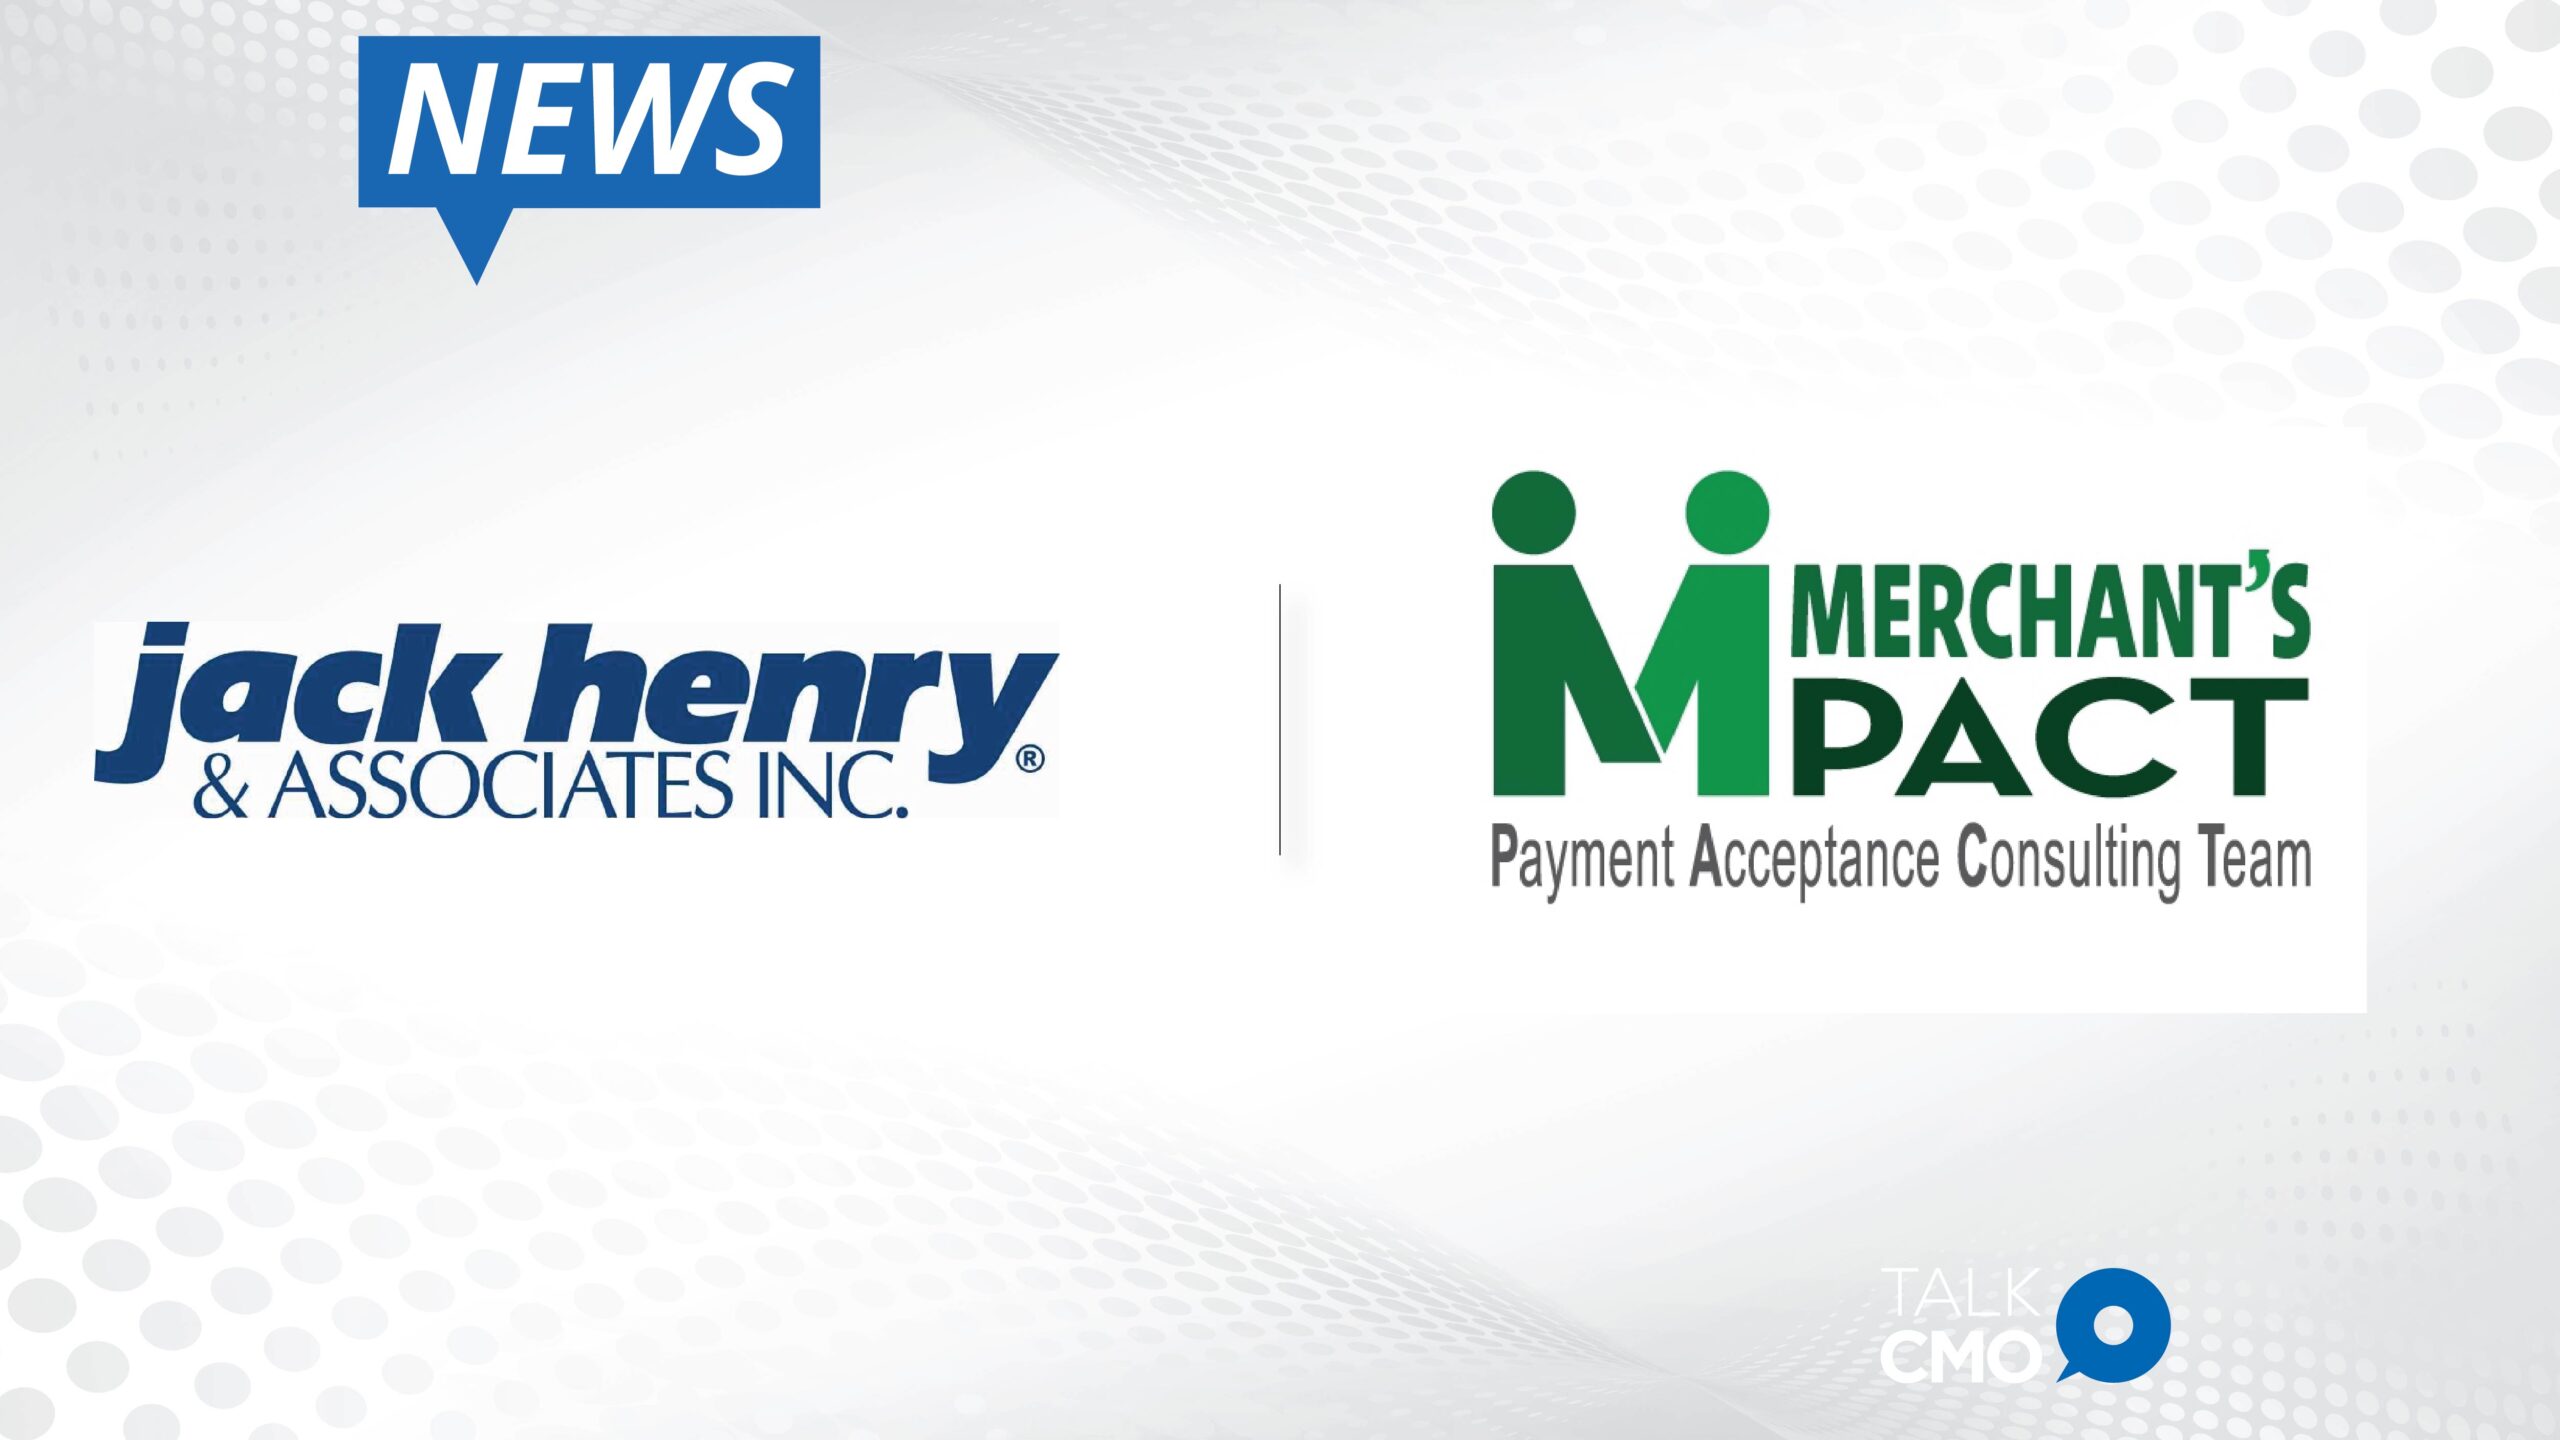 Jack Henry Establishes Partnership with Merchant's PACT